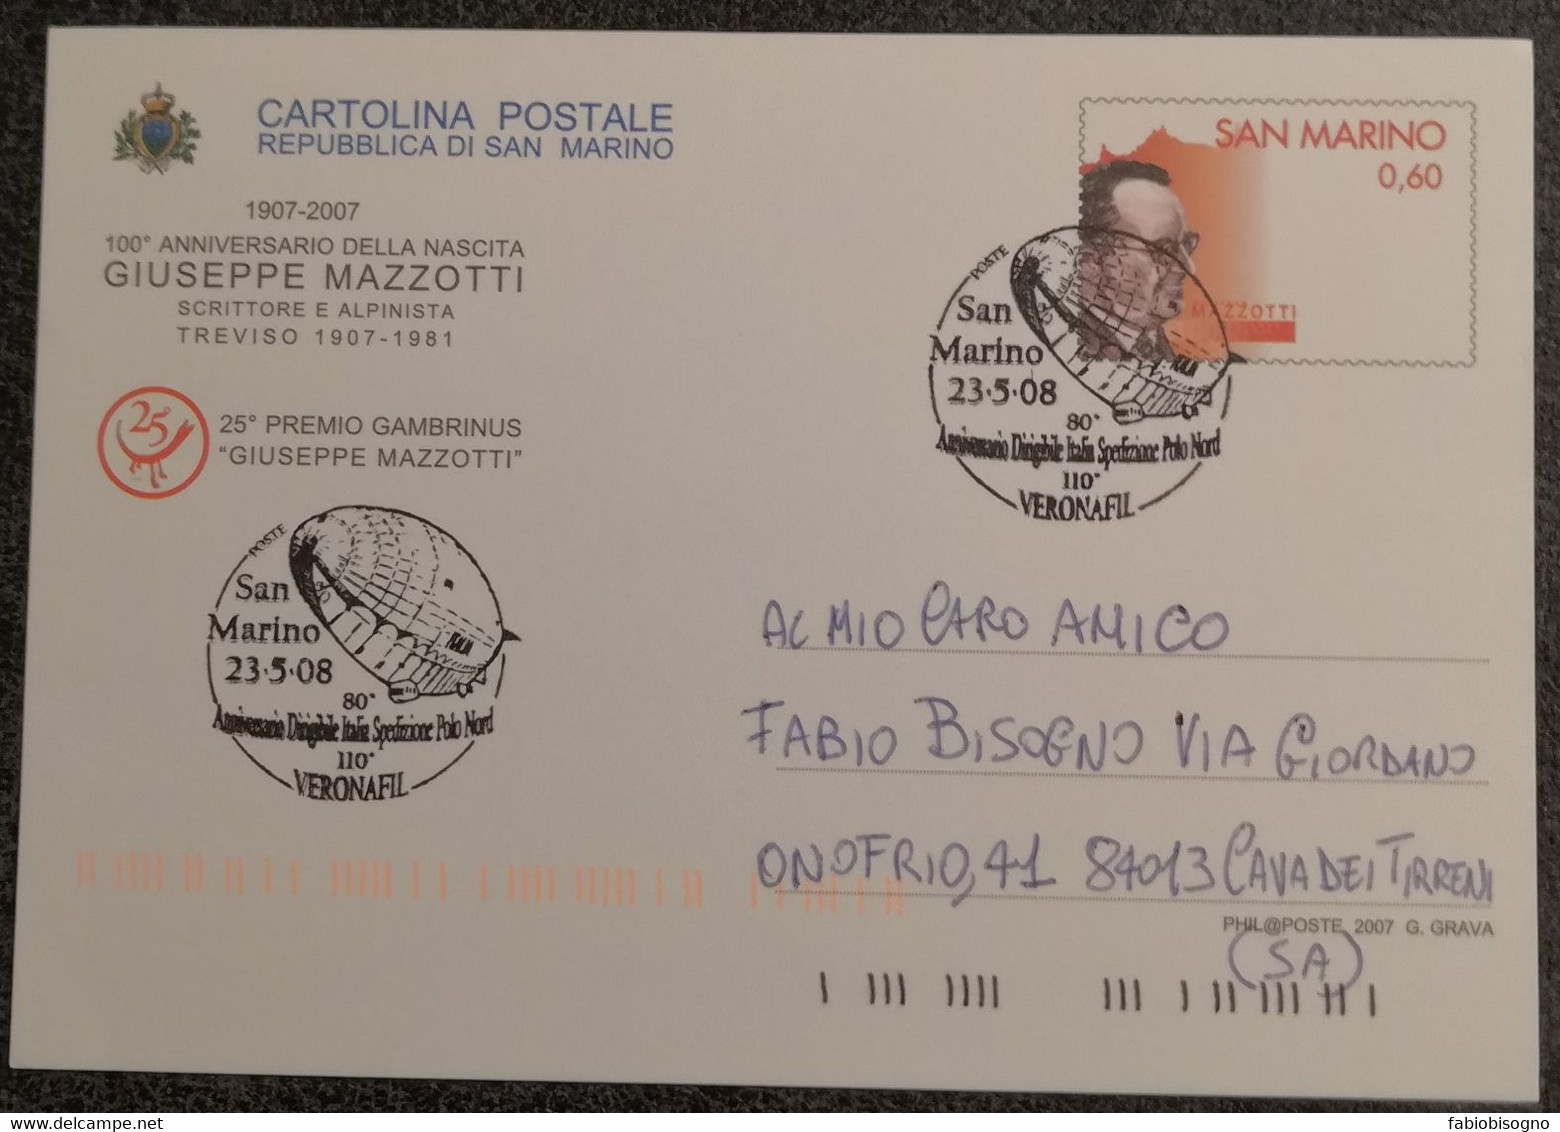 San MArino 23.5.2008 - MAZZOTTI € 0,60 - Cartolina Postale Viaggiata - Storia Postale